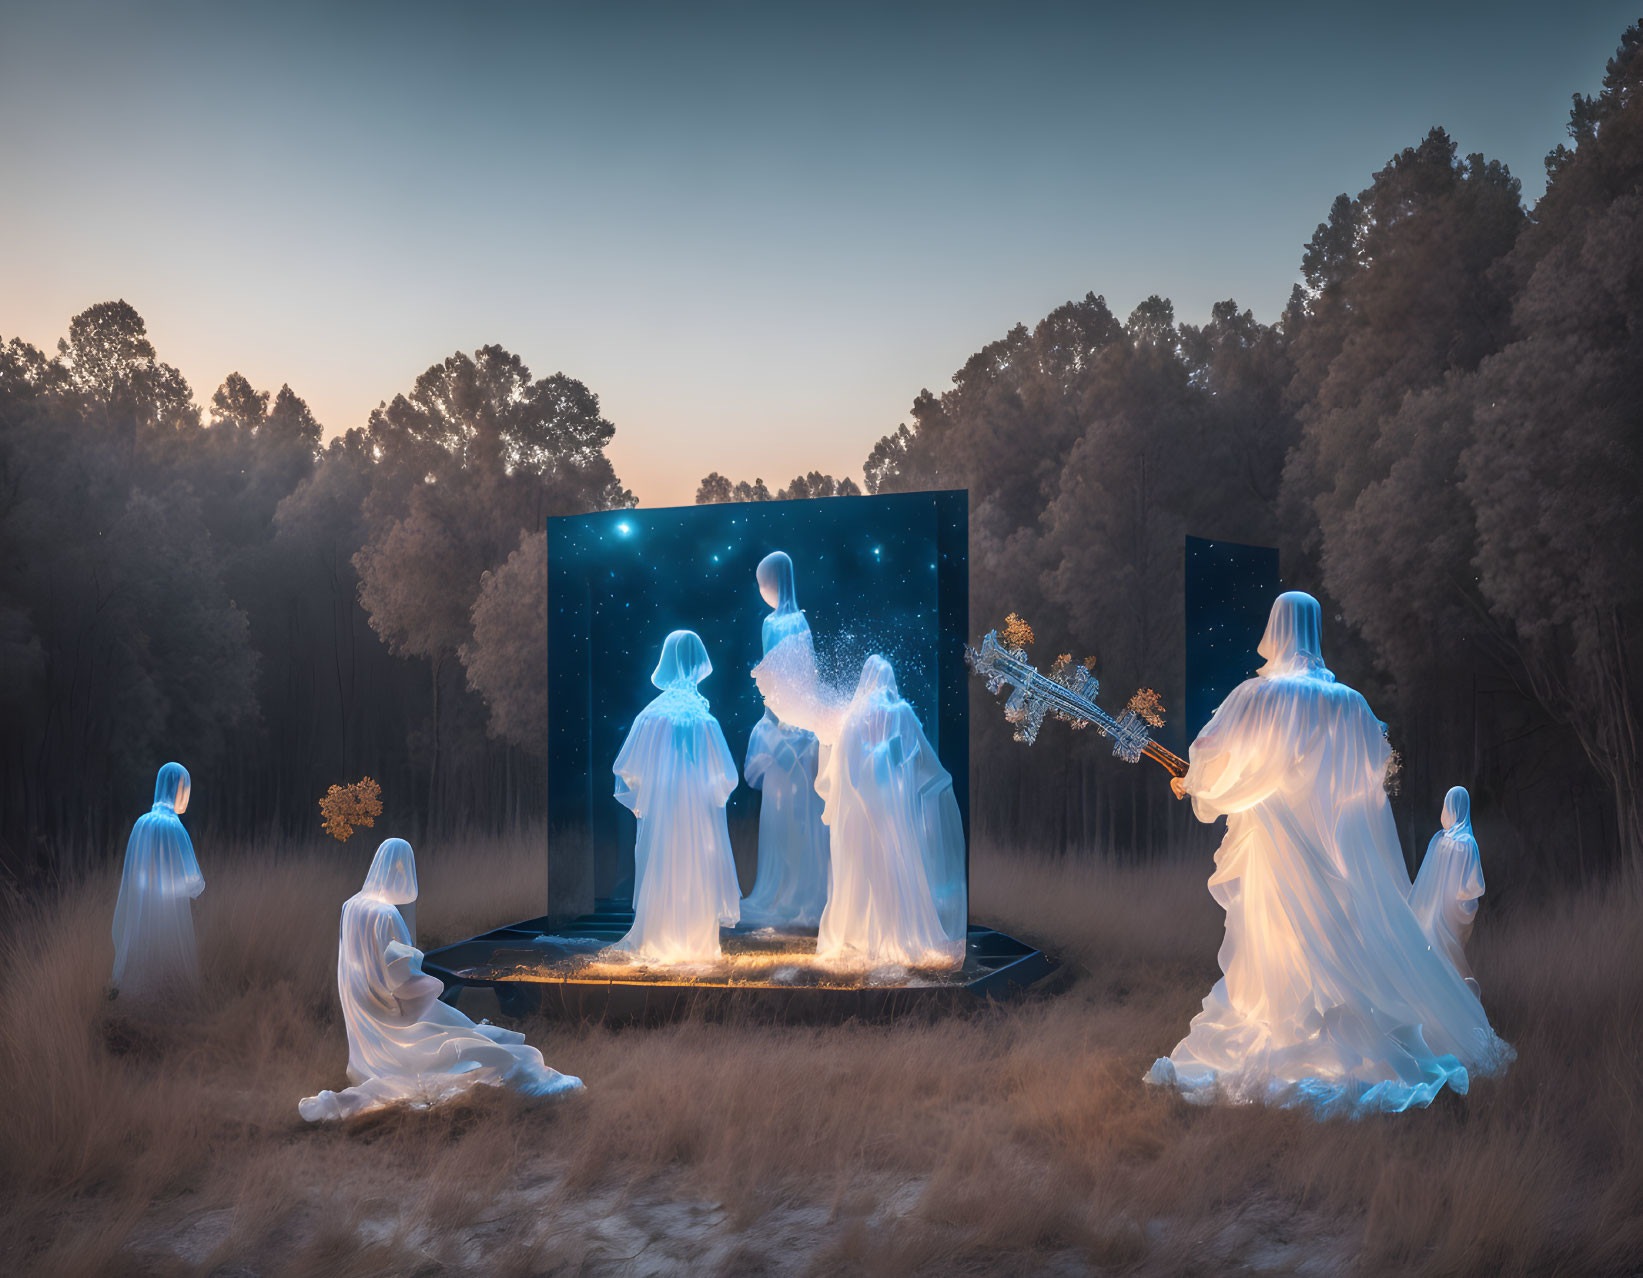 Figures in glowing white cloaks around cosmic doorway in forest